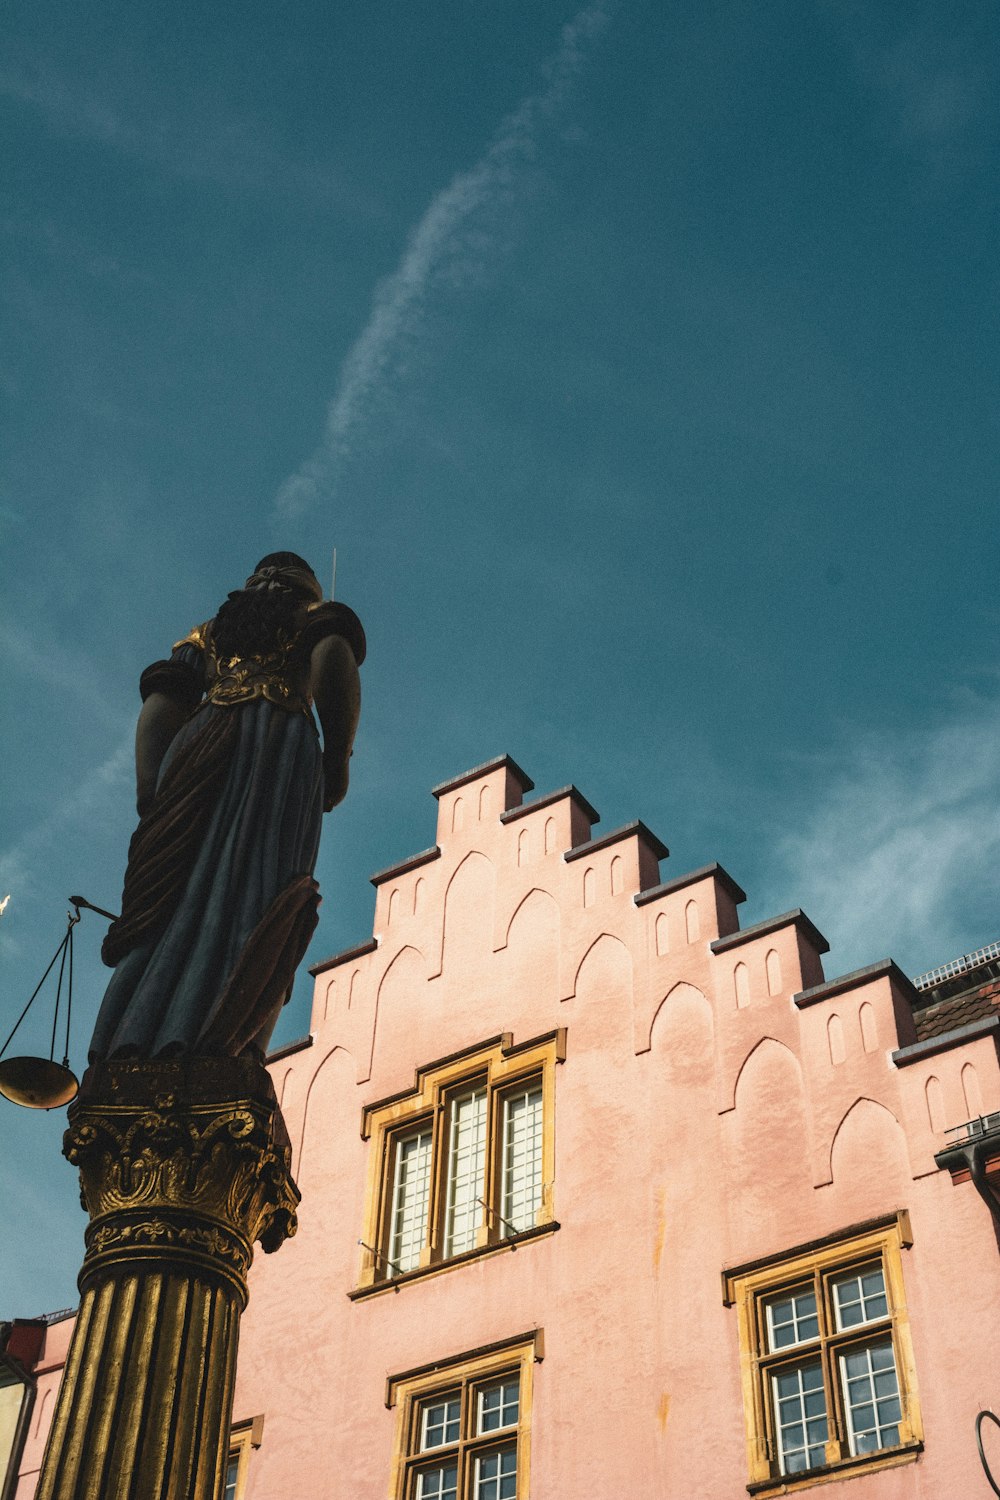 Una estatua de una dama sosteniendo una balanza frente a un edificio